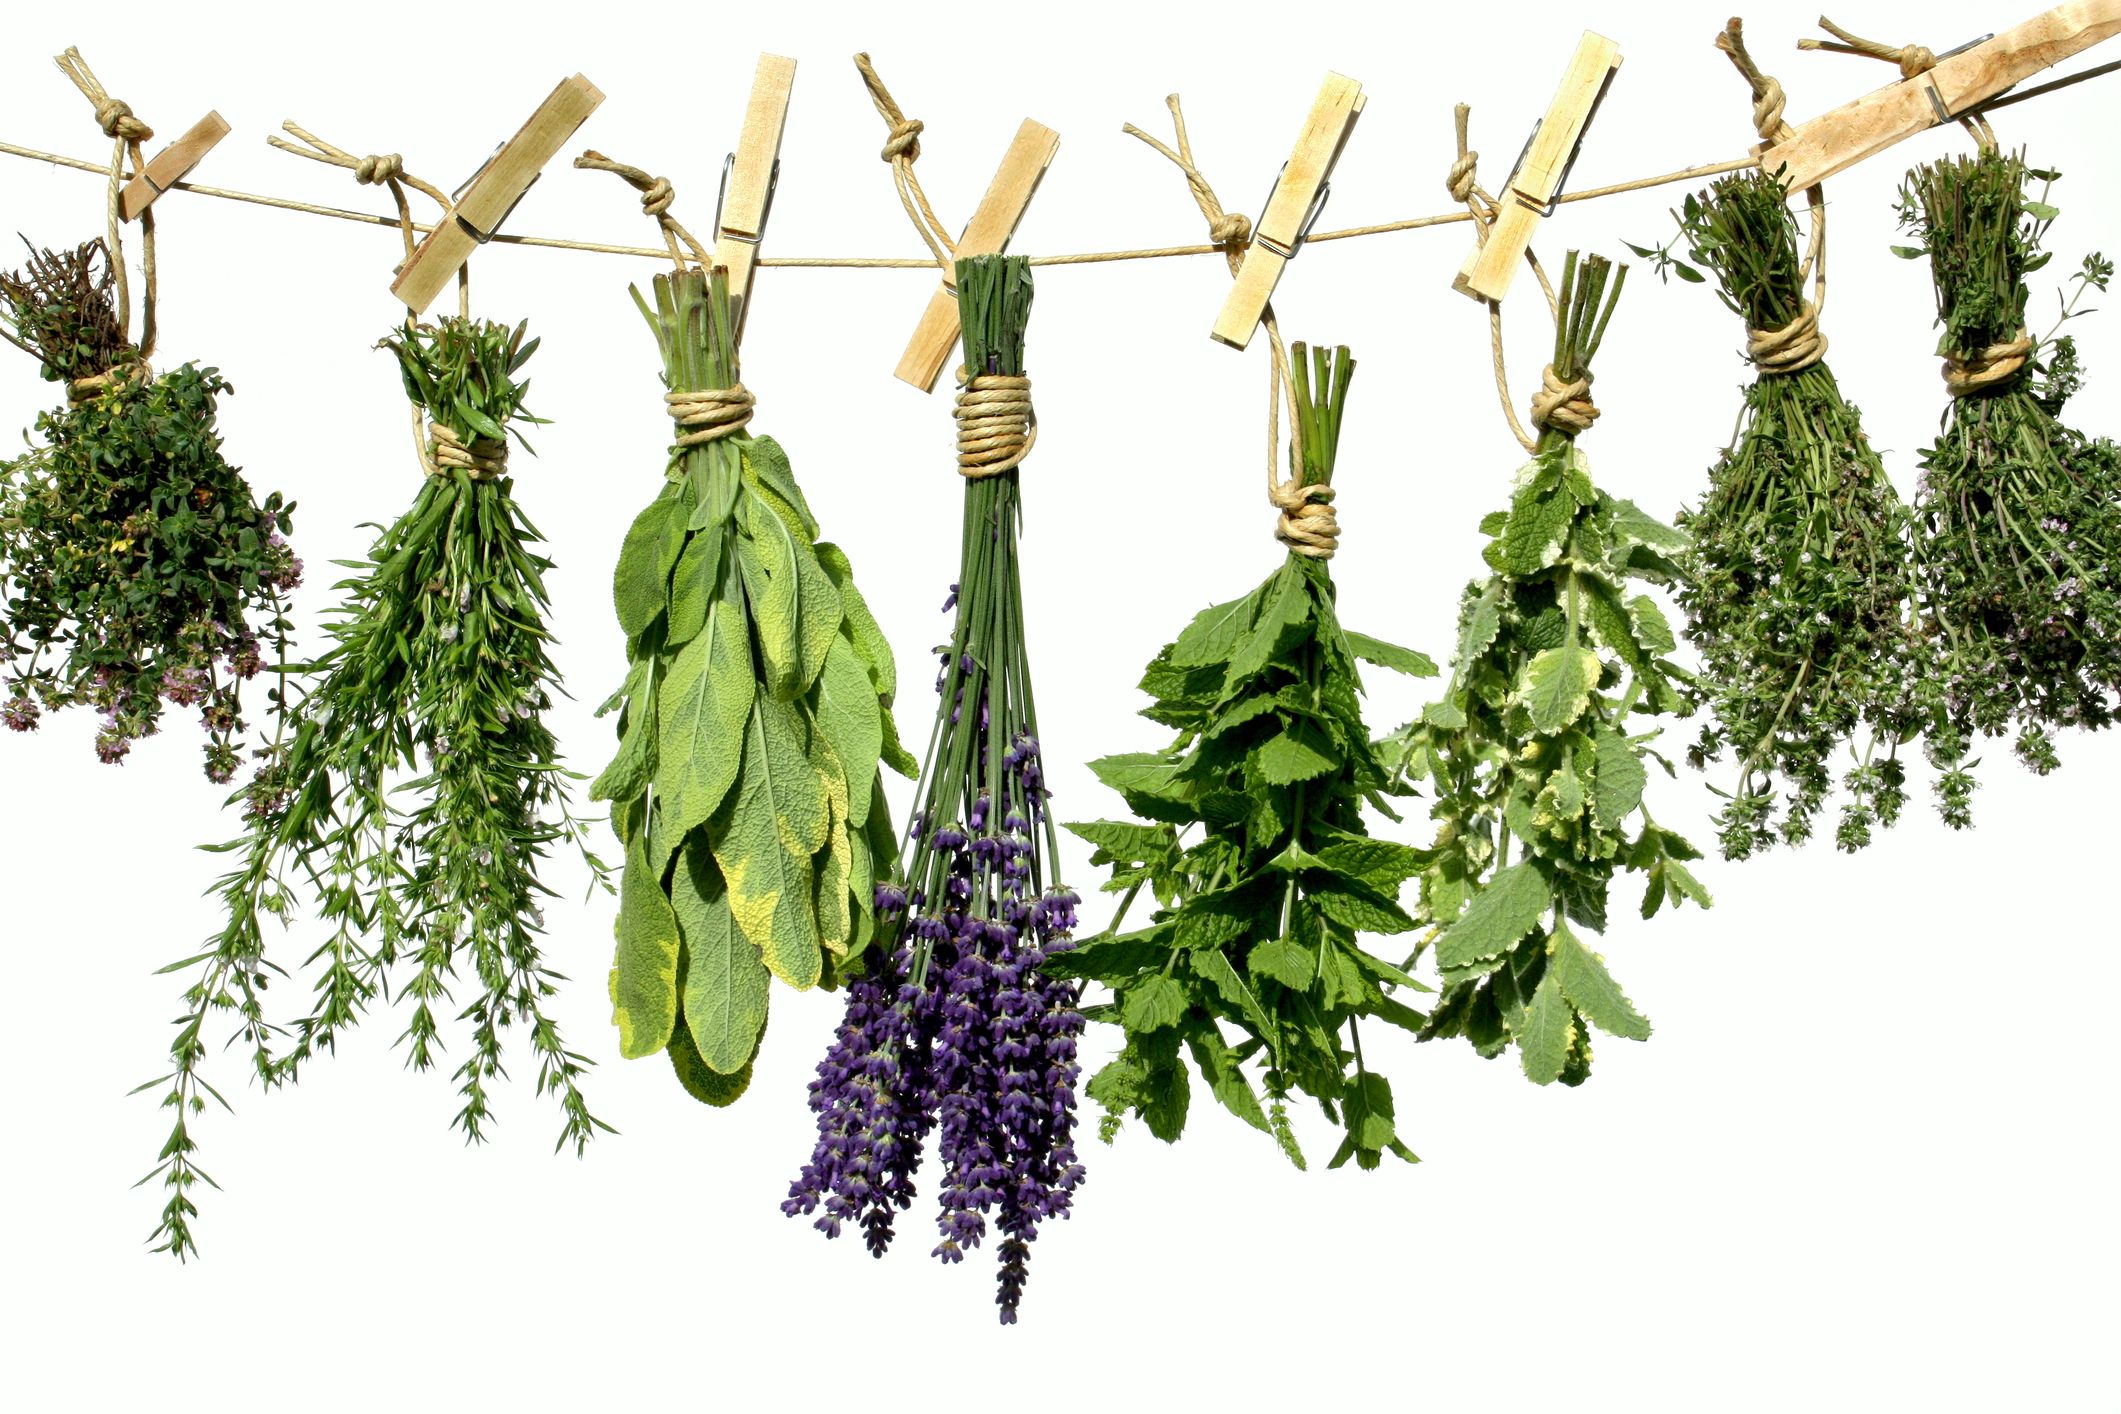 Herbs hanging